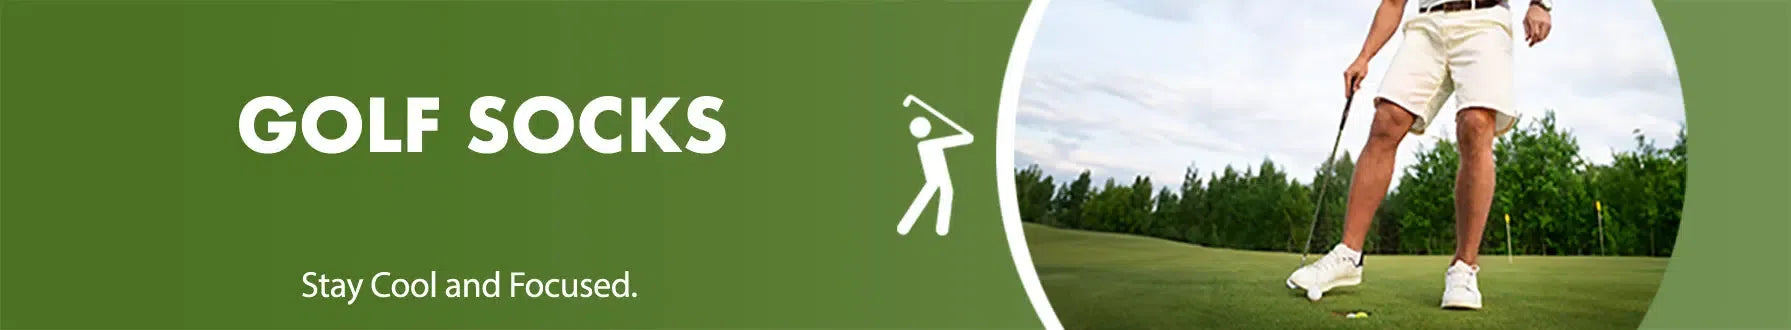 GoWith golf socks collection banner desktop